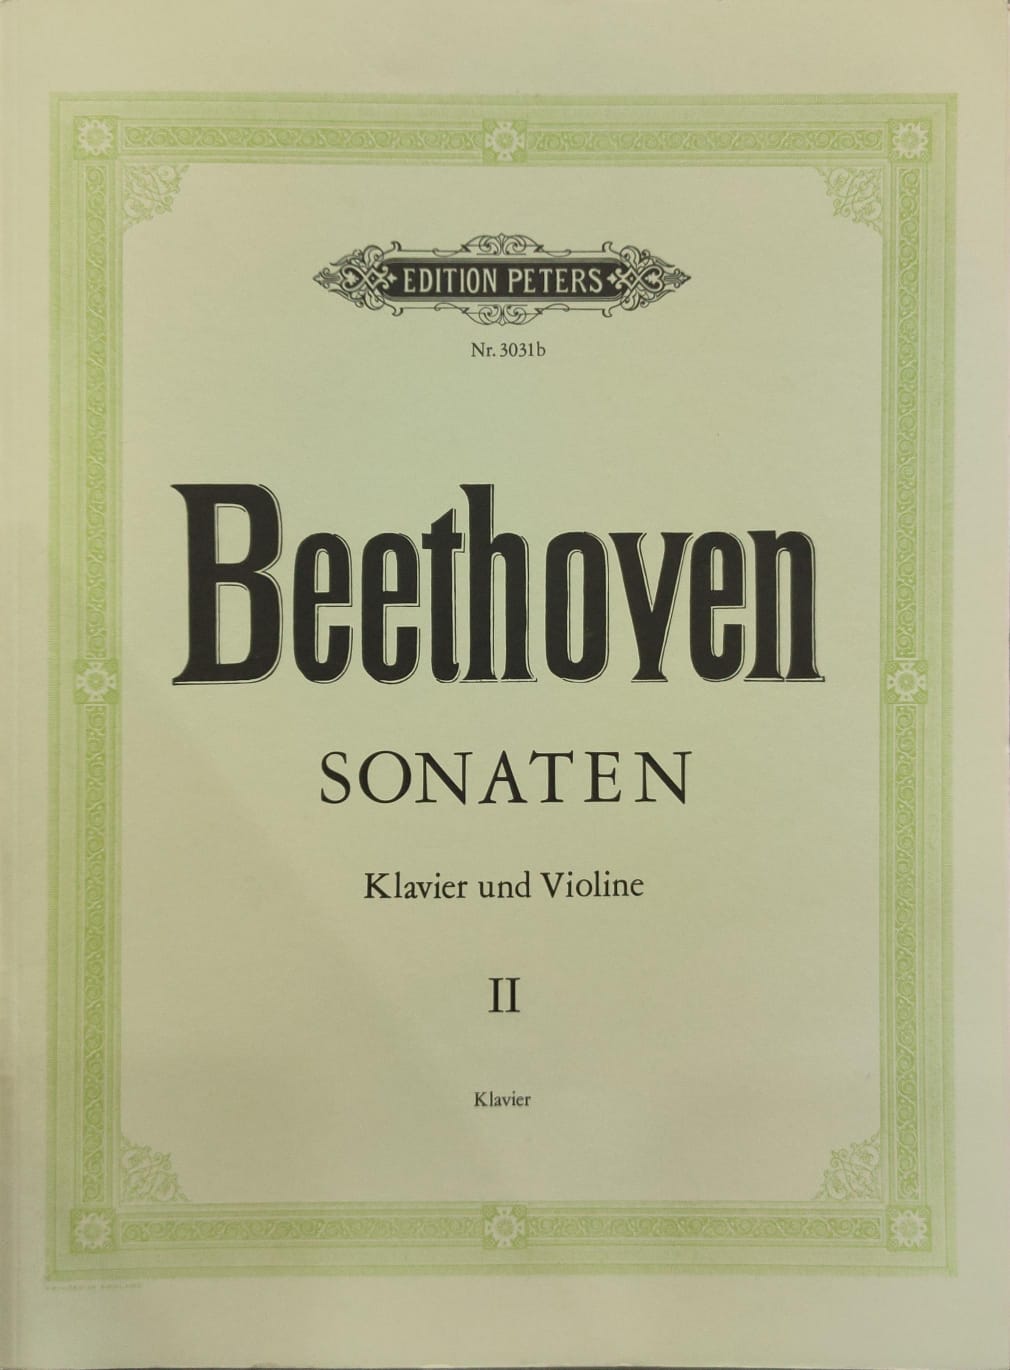 Ludwig van Beethoven: Sonatas for Violin and Piano Vol. 2